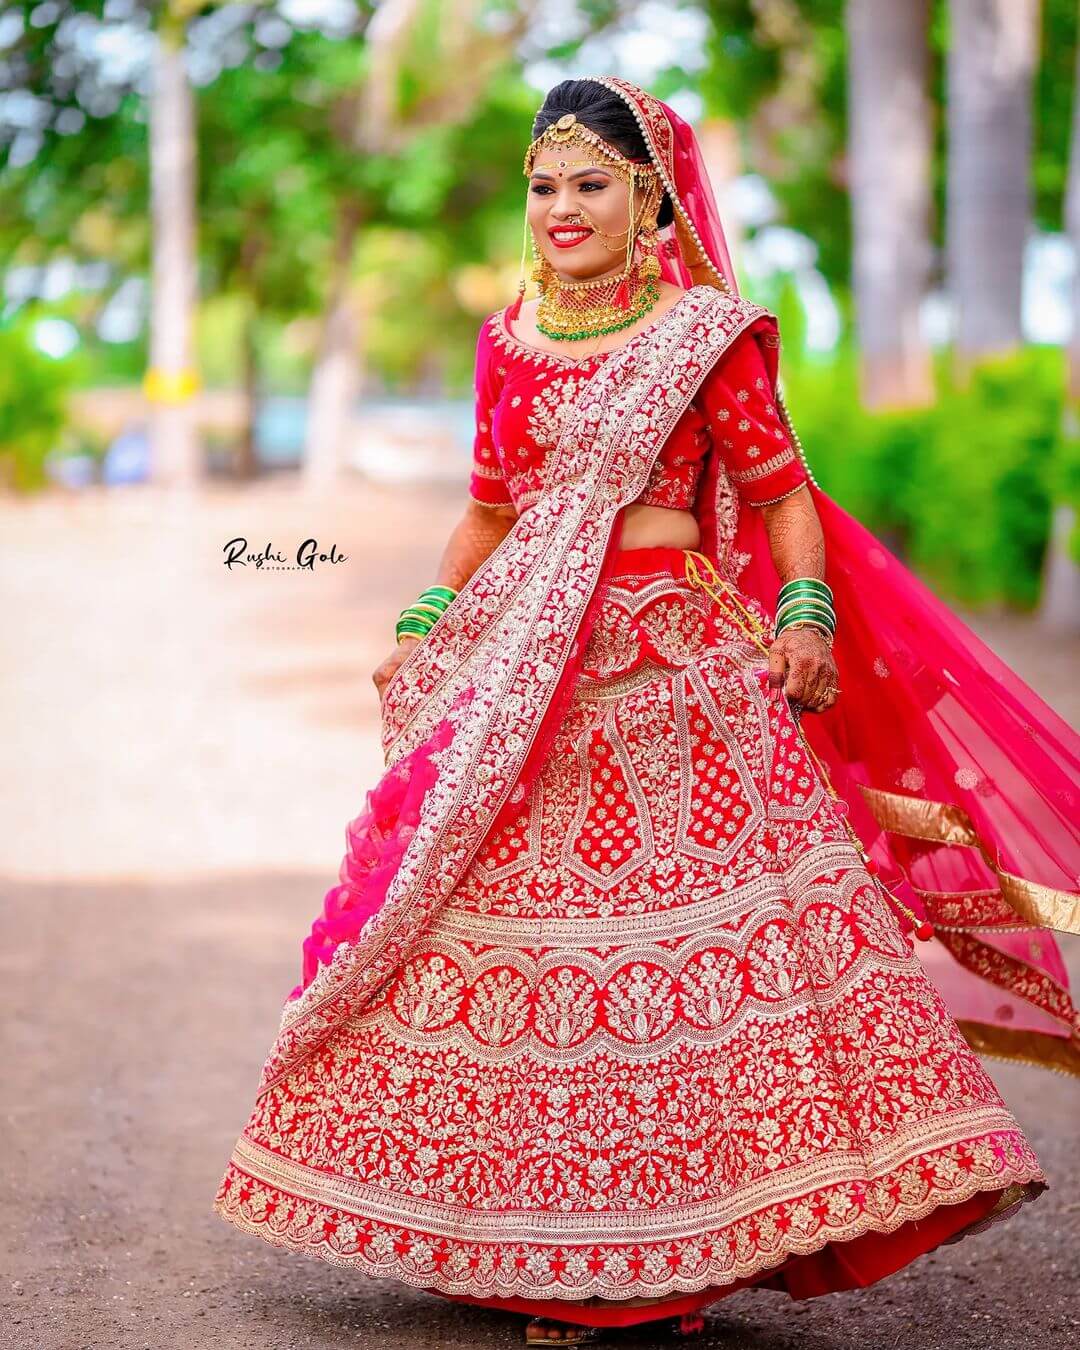 Indian Bridal Dupatta Styles That Pink Glow